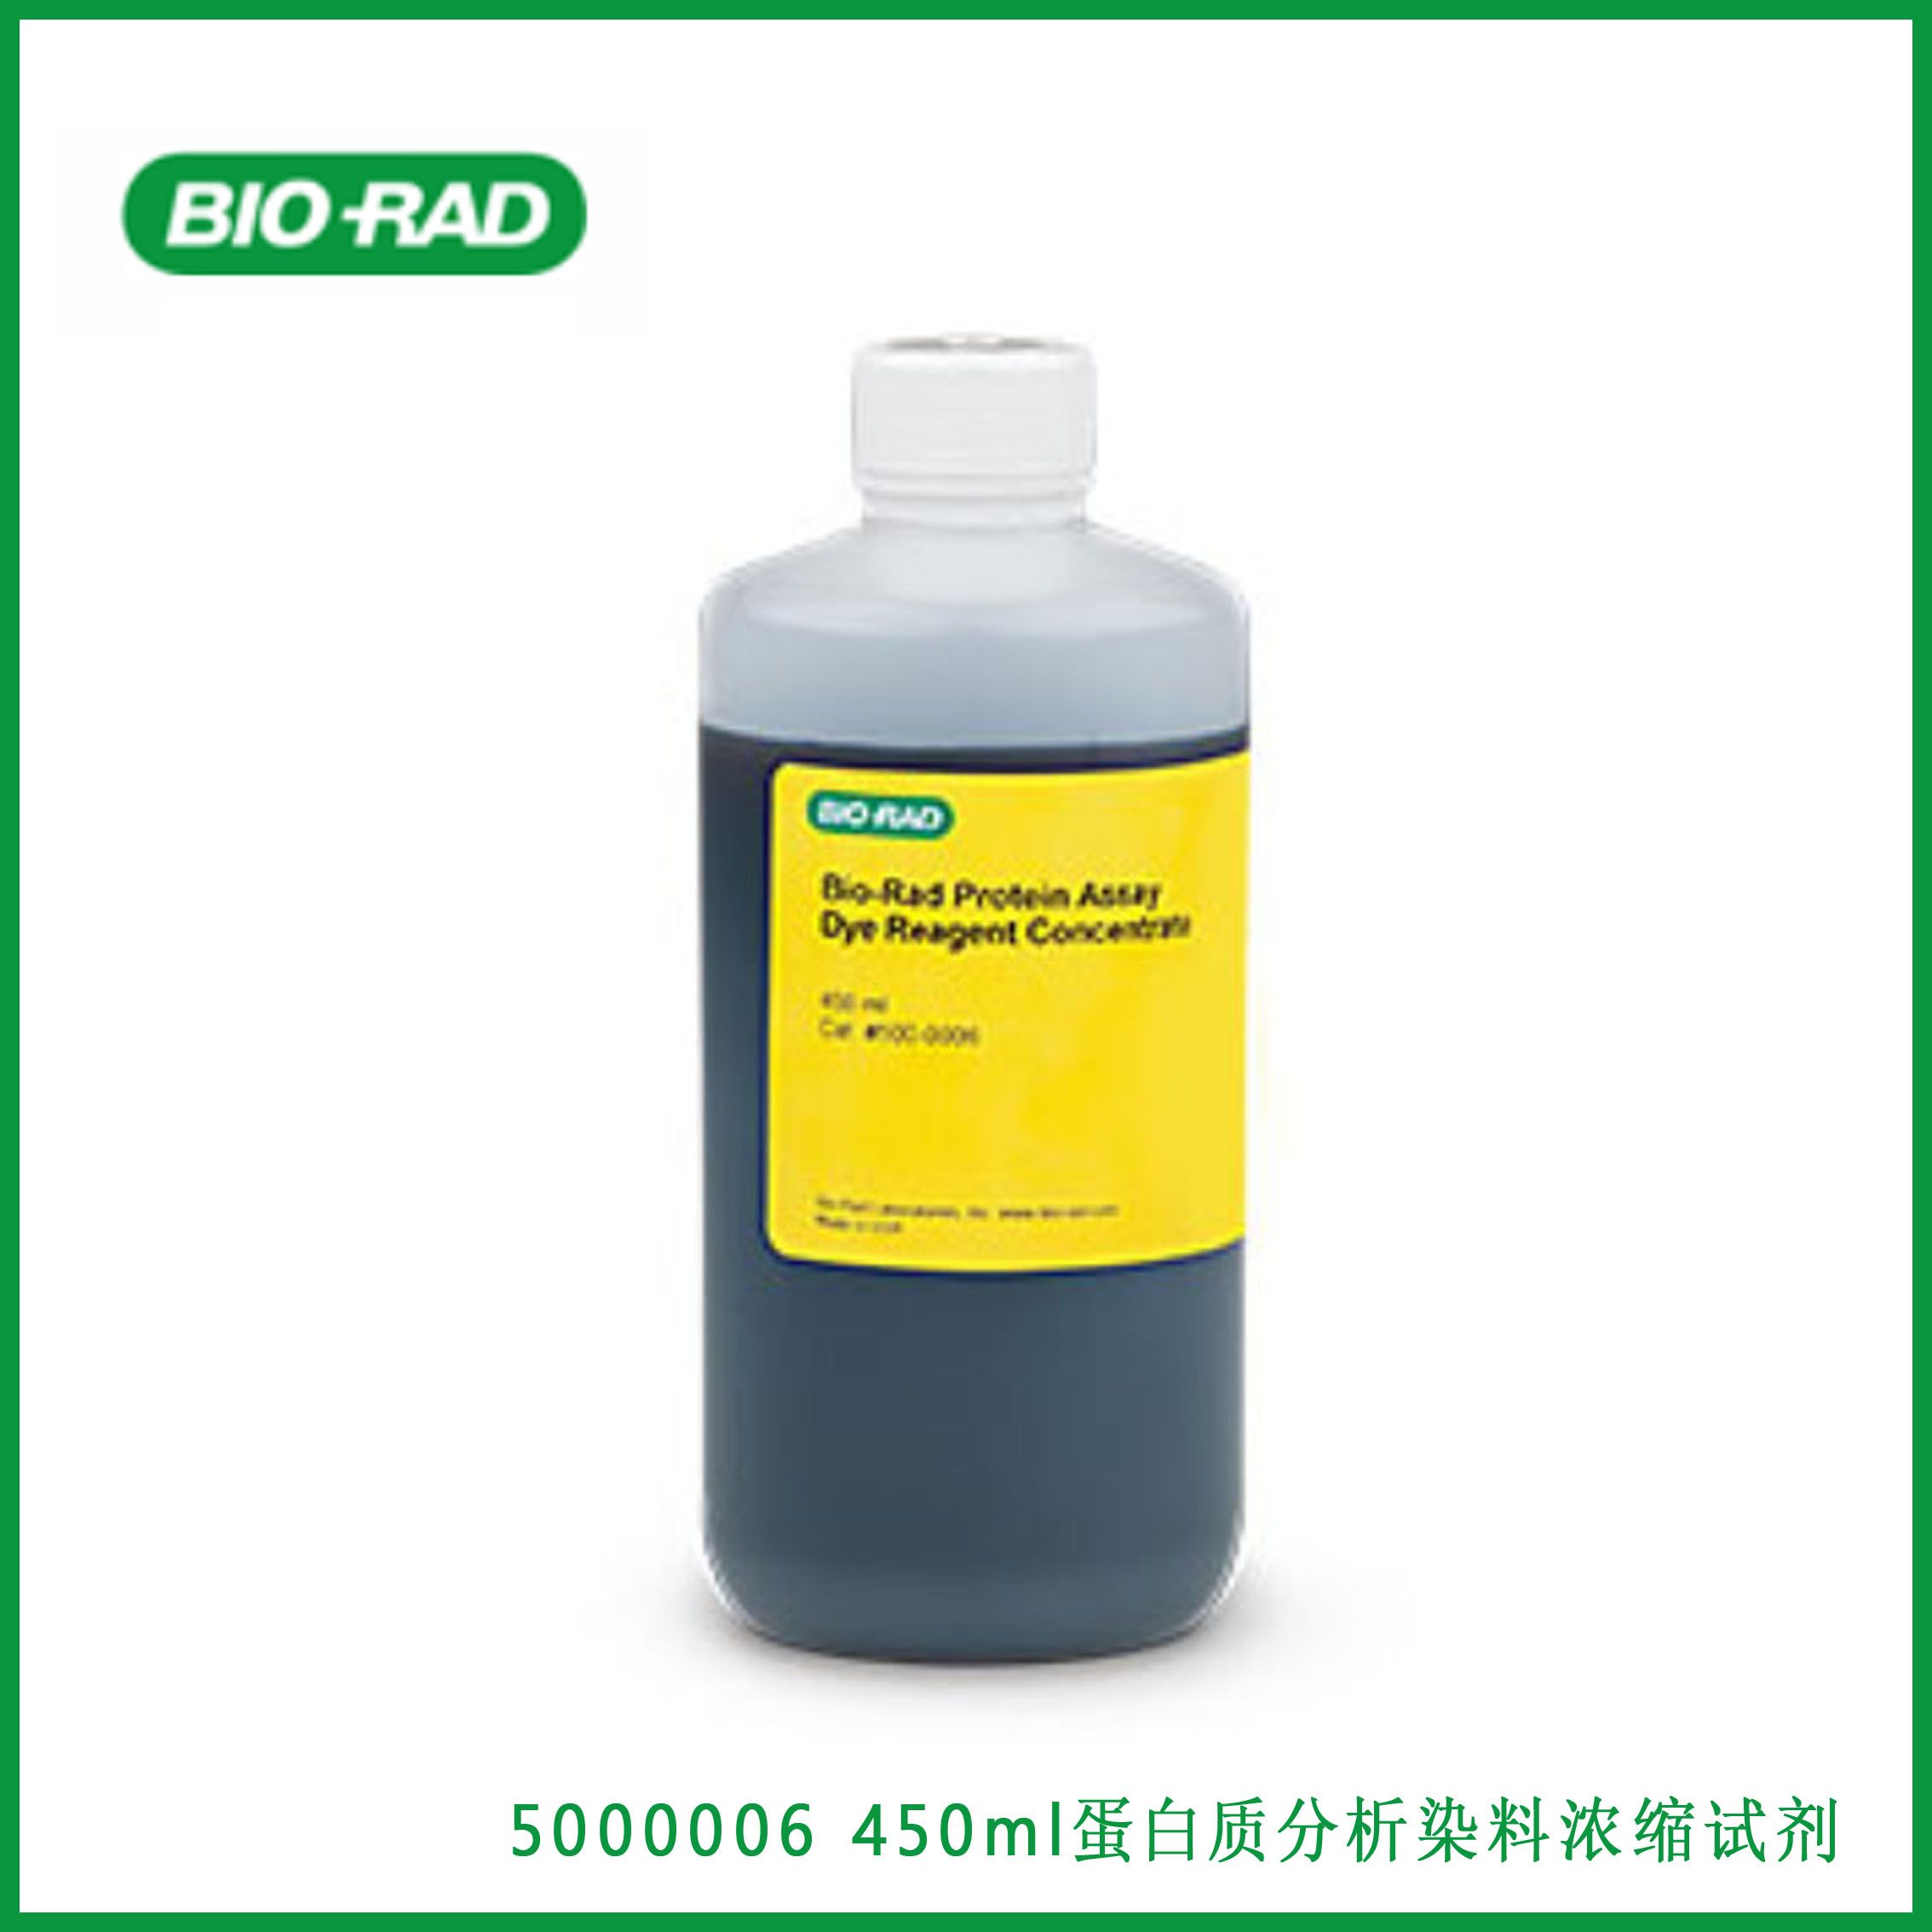  伯乐Bio-Rad 5000006 Protein Assay Dye Reagent Concentrate, 450 ml蛋白质分析染料浓缩试剂，现货